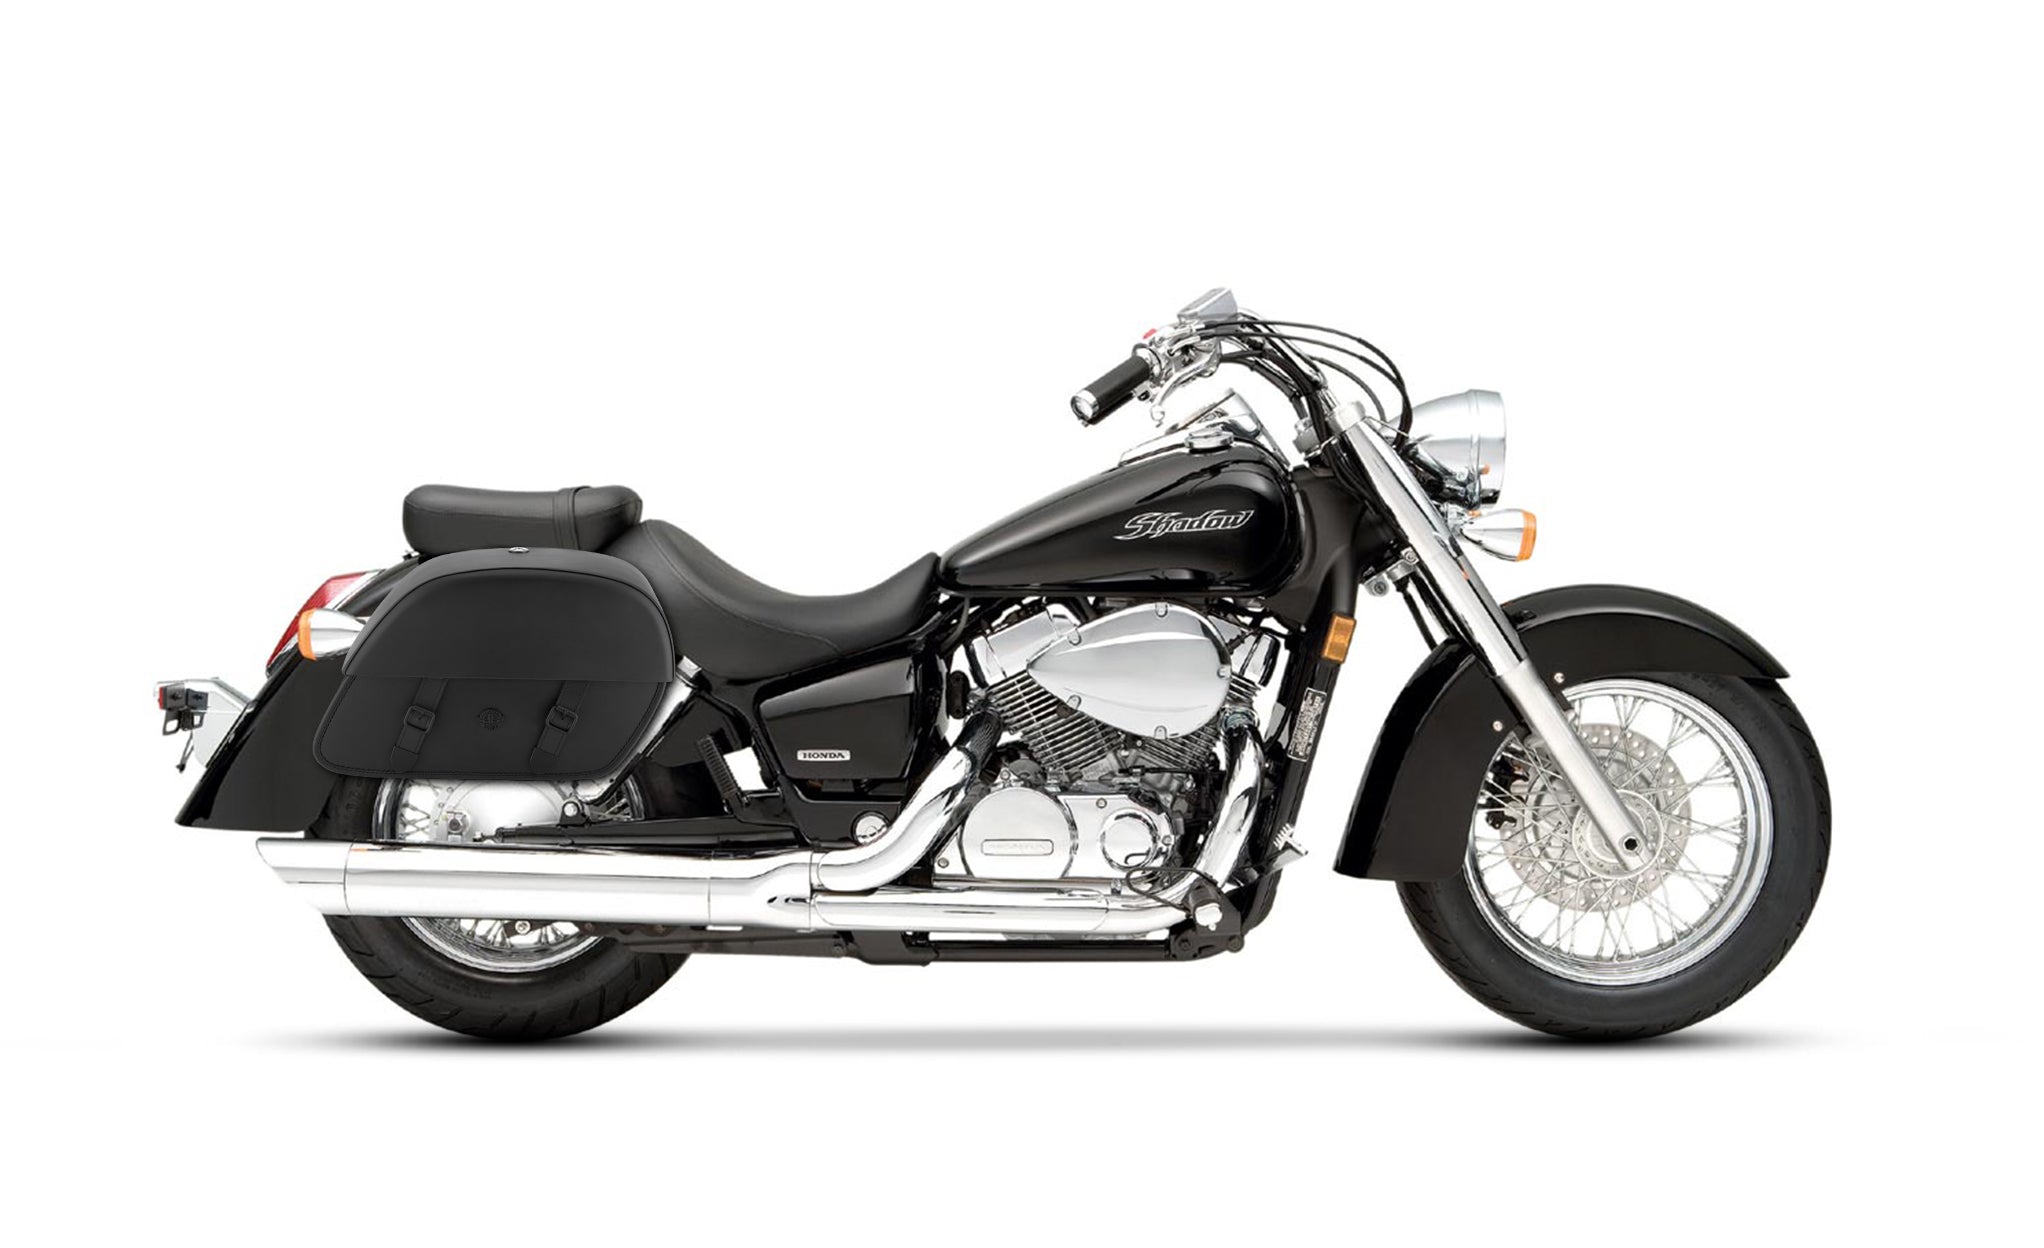 28L - Baelor Medium Quick Mount Honda Shadow 750 Aero Motorcycle Saddlebags @expand